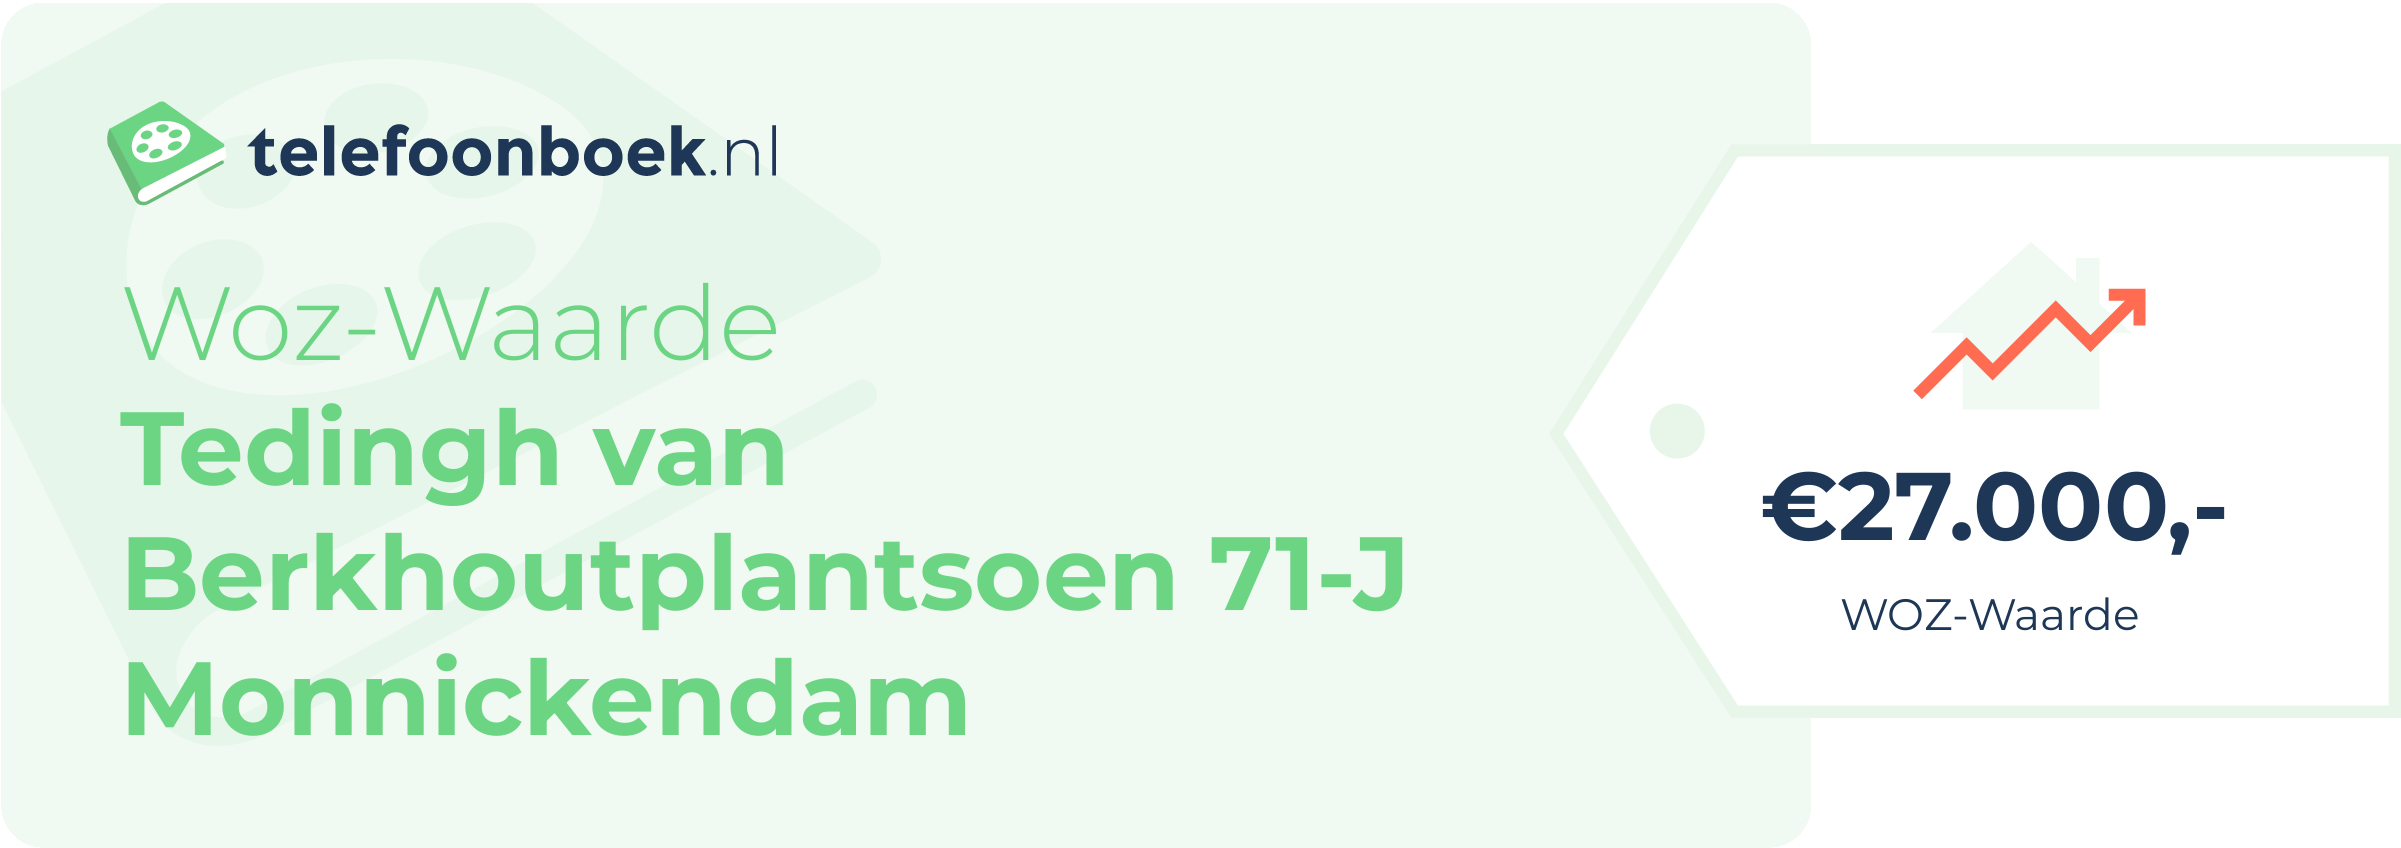 WOZ-waarde Tedingh Van Berkhoutplantsoen 71-J Monnickendam